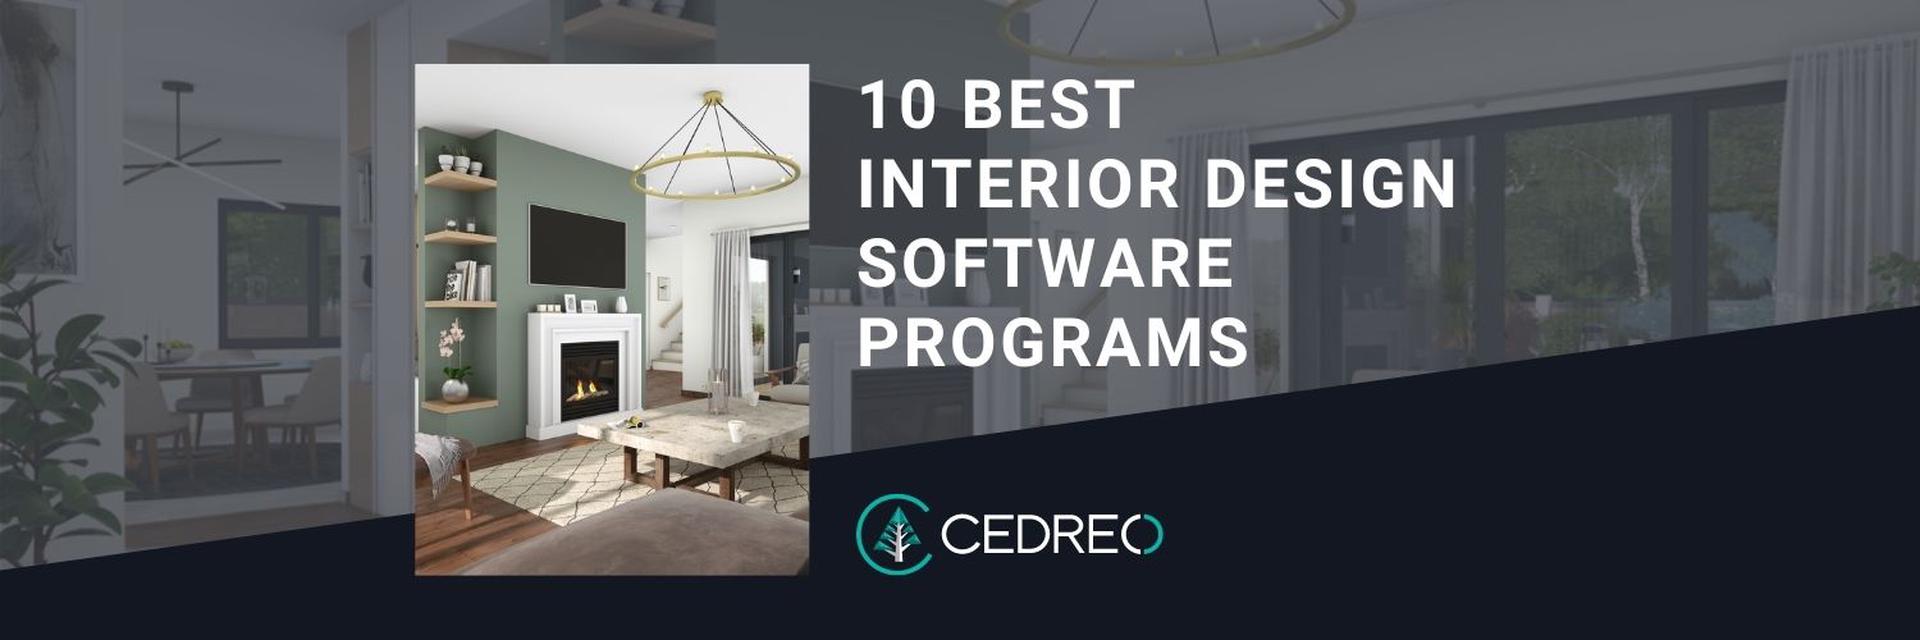 best interior design software for mac free